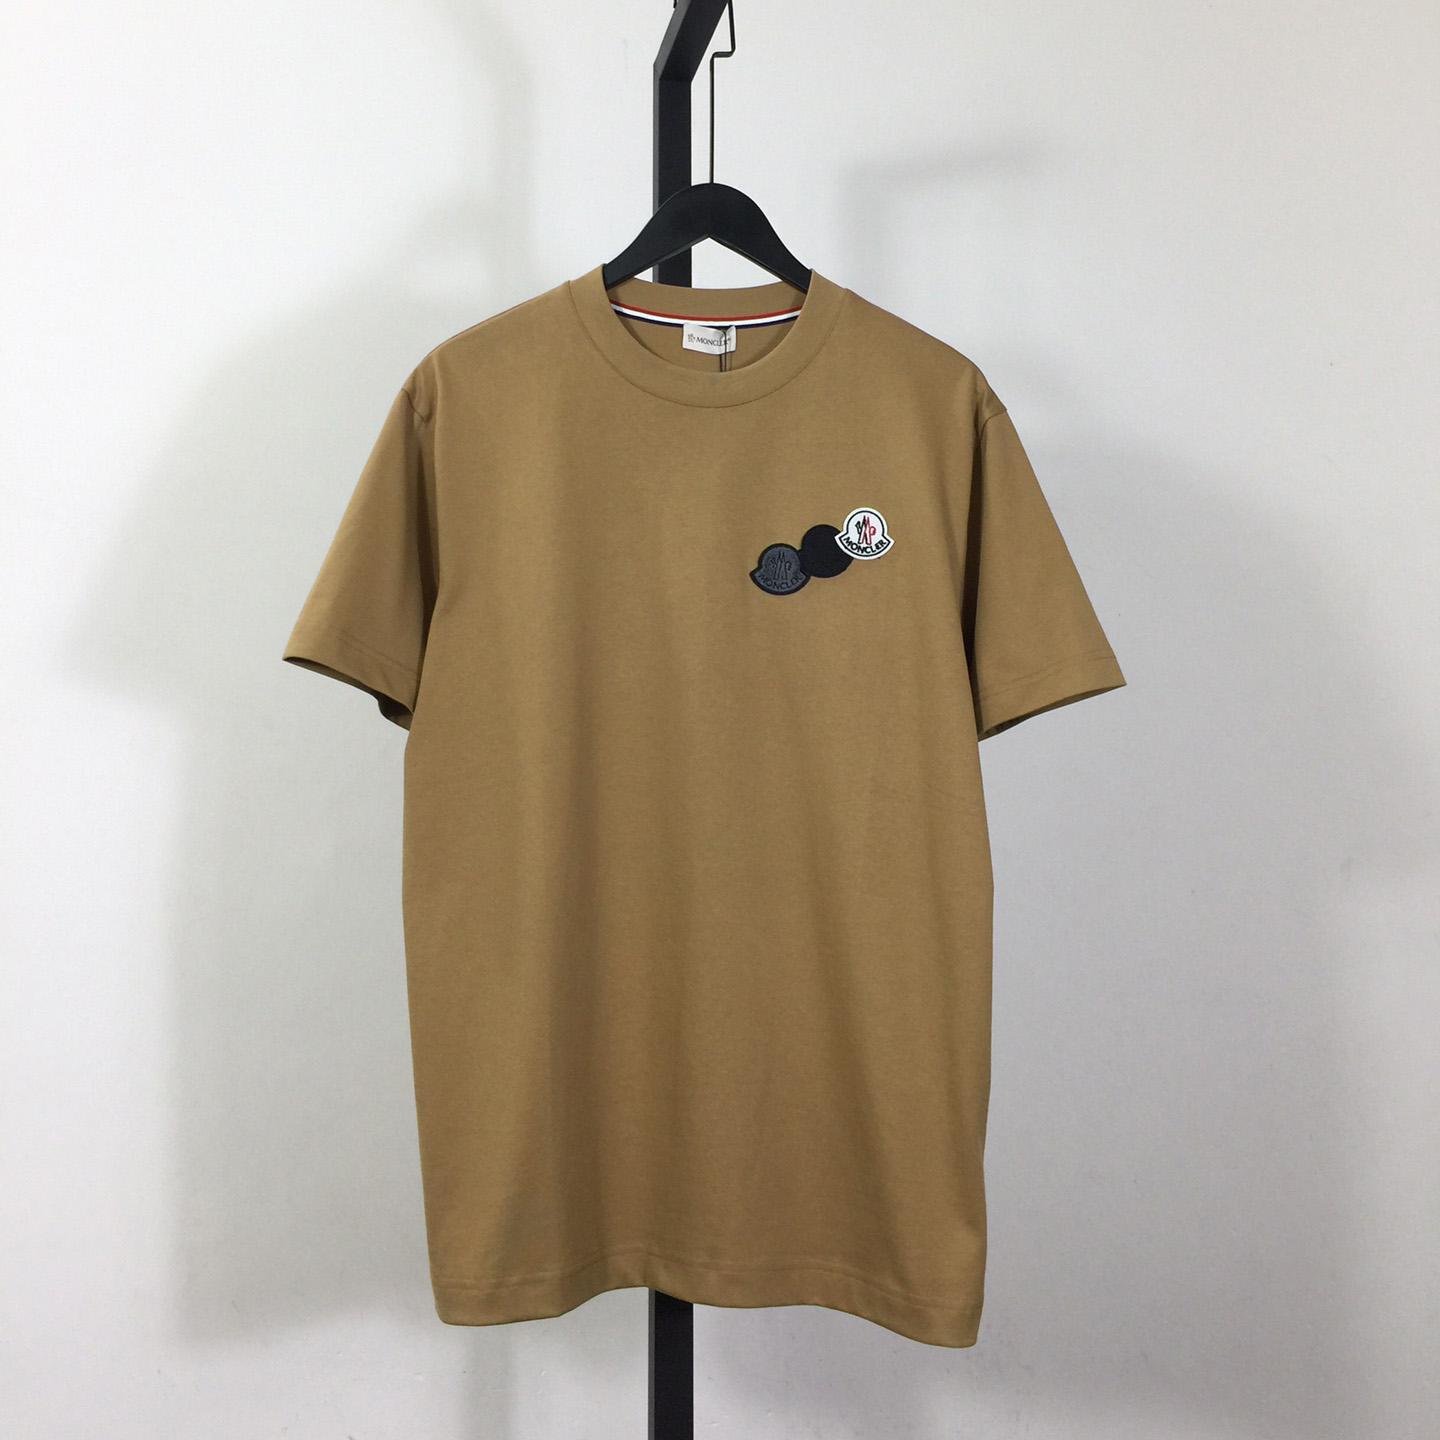 Moncler Cotton T-shirt - DesignerGu